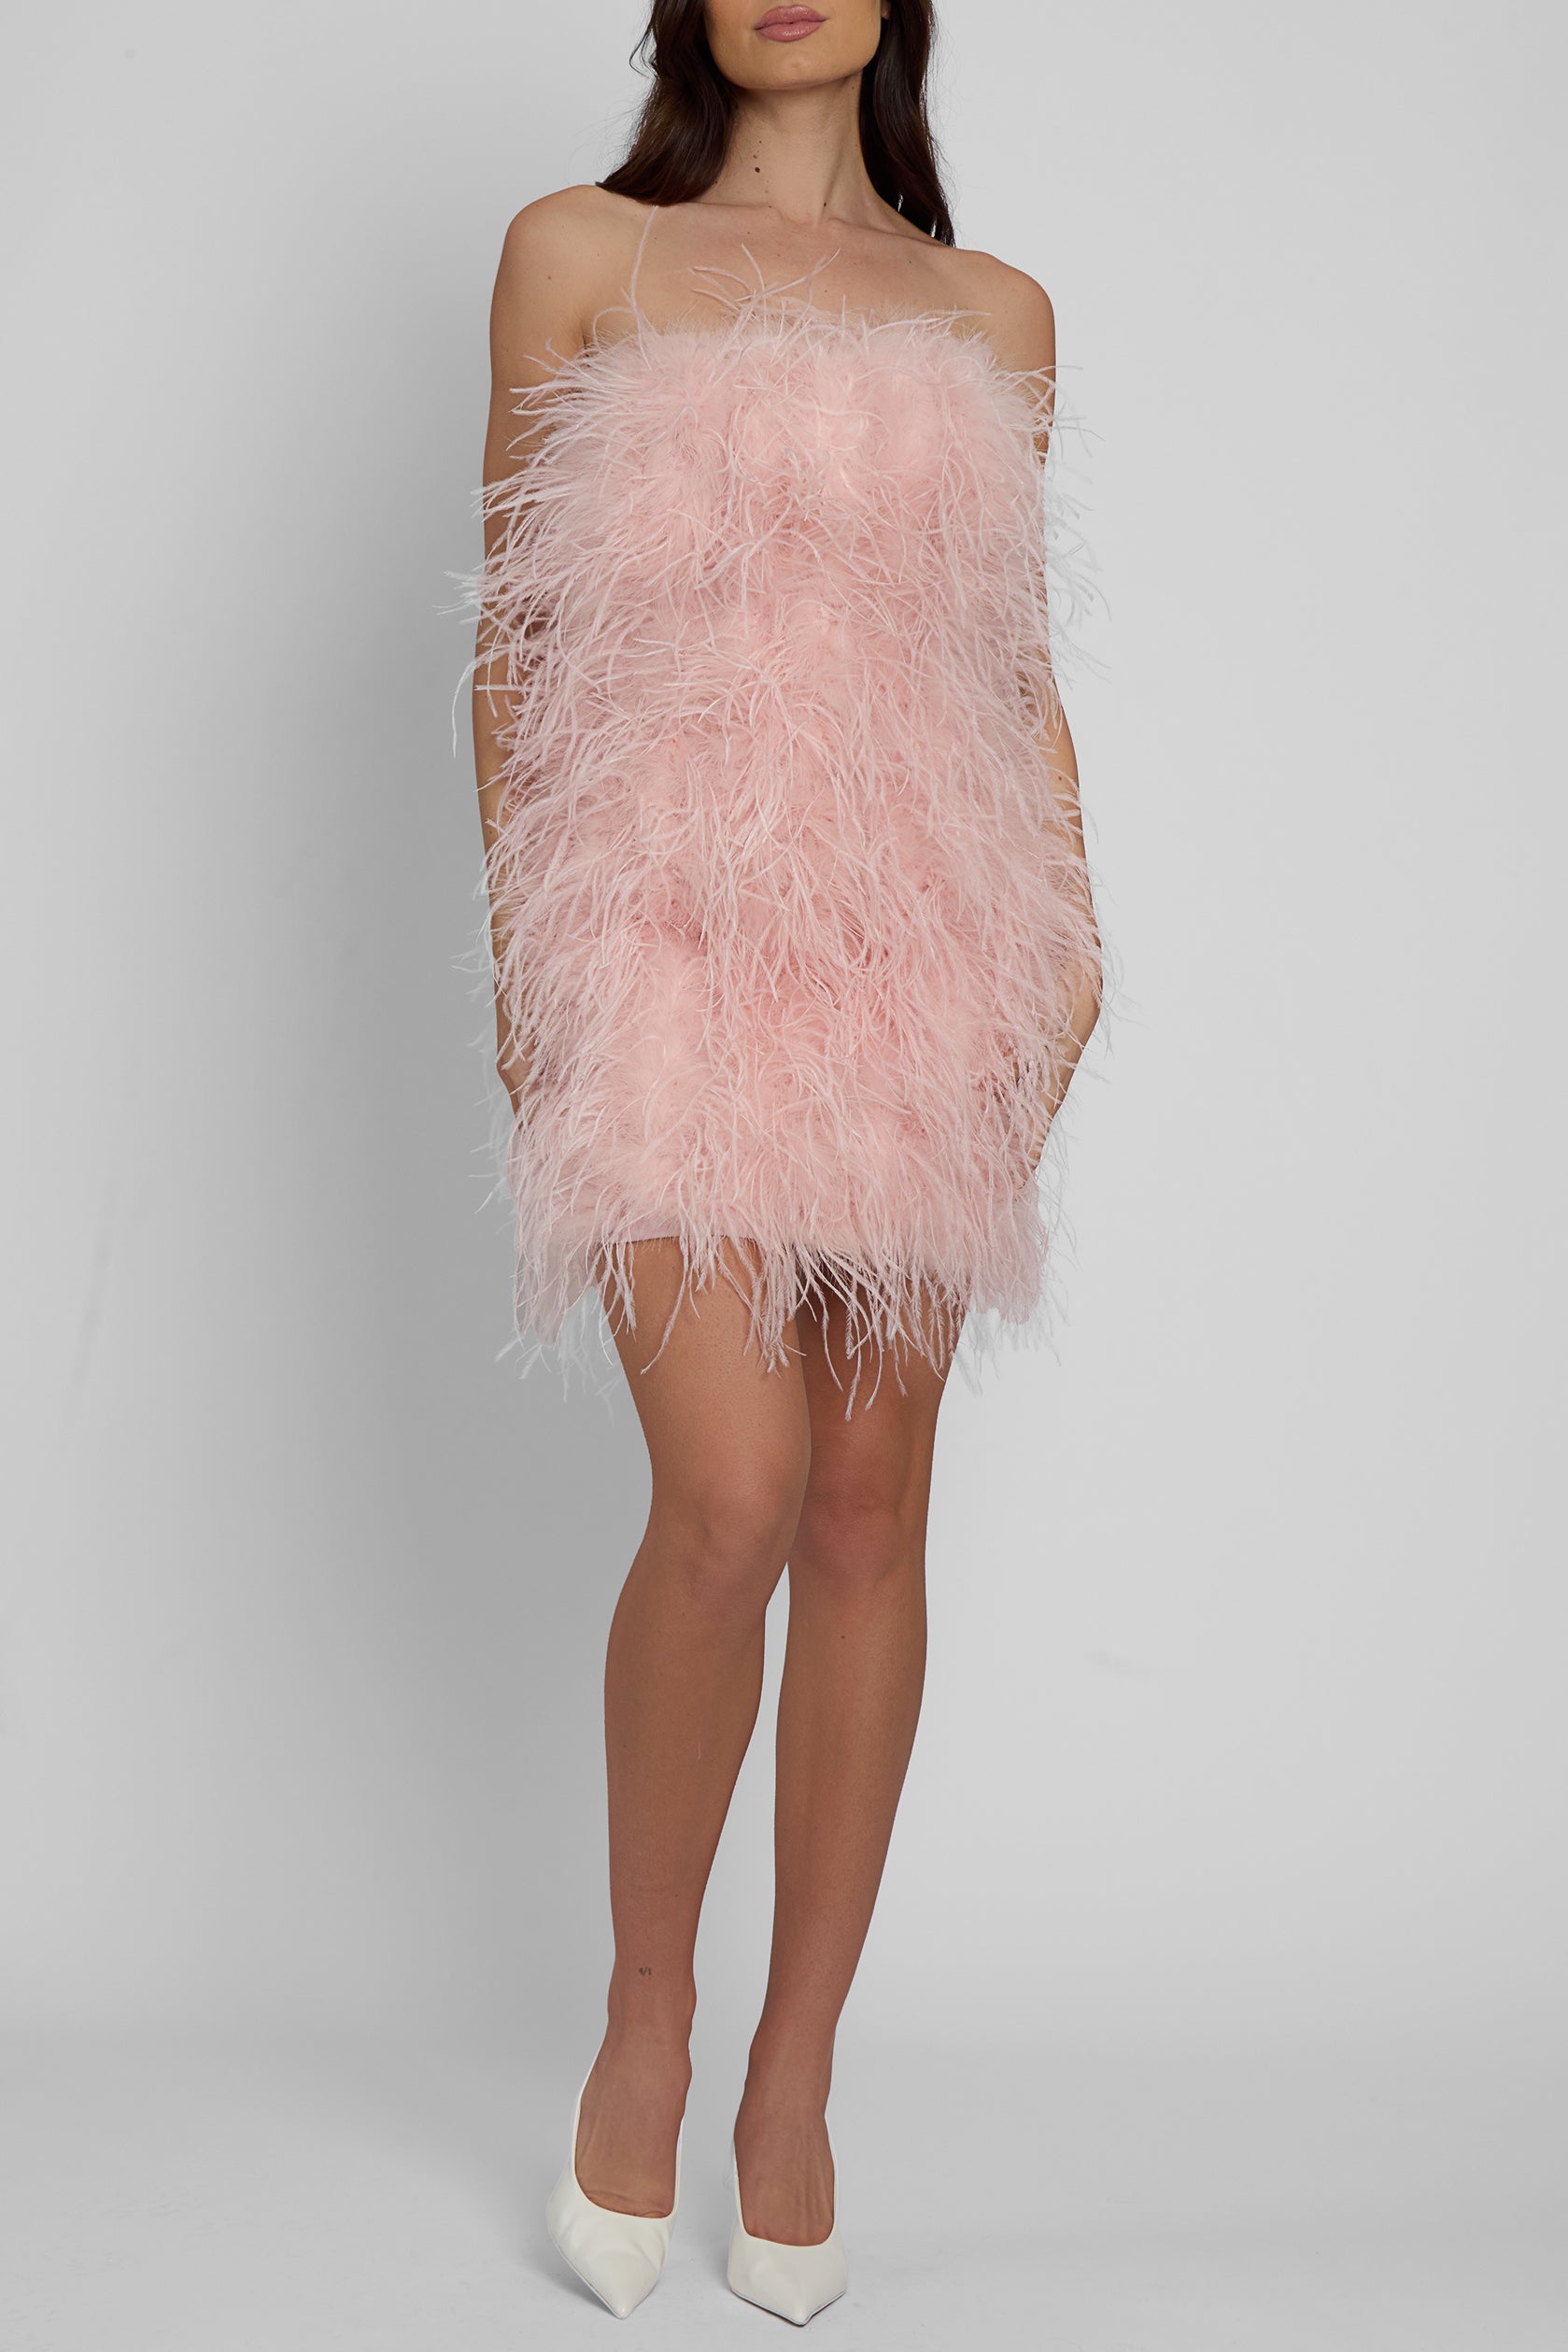 Cloud Feather Mini Dress - Pink.